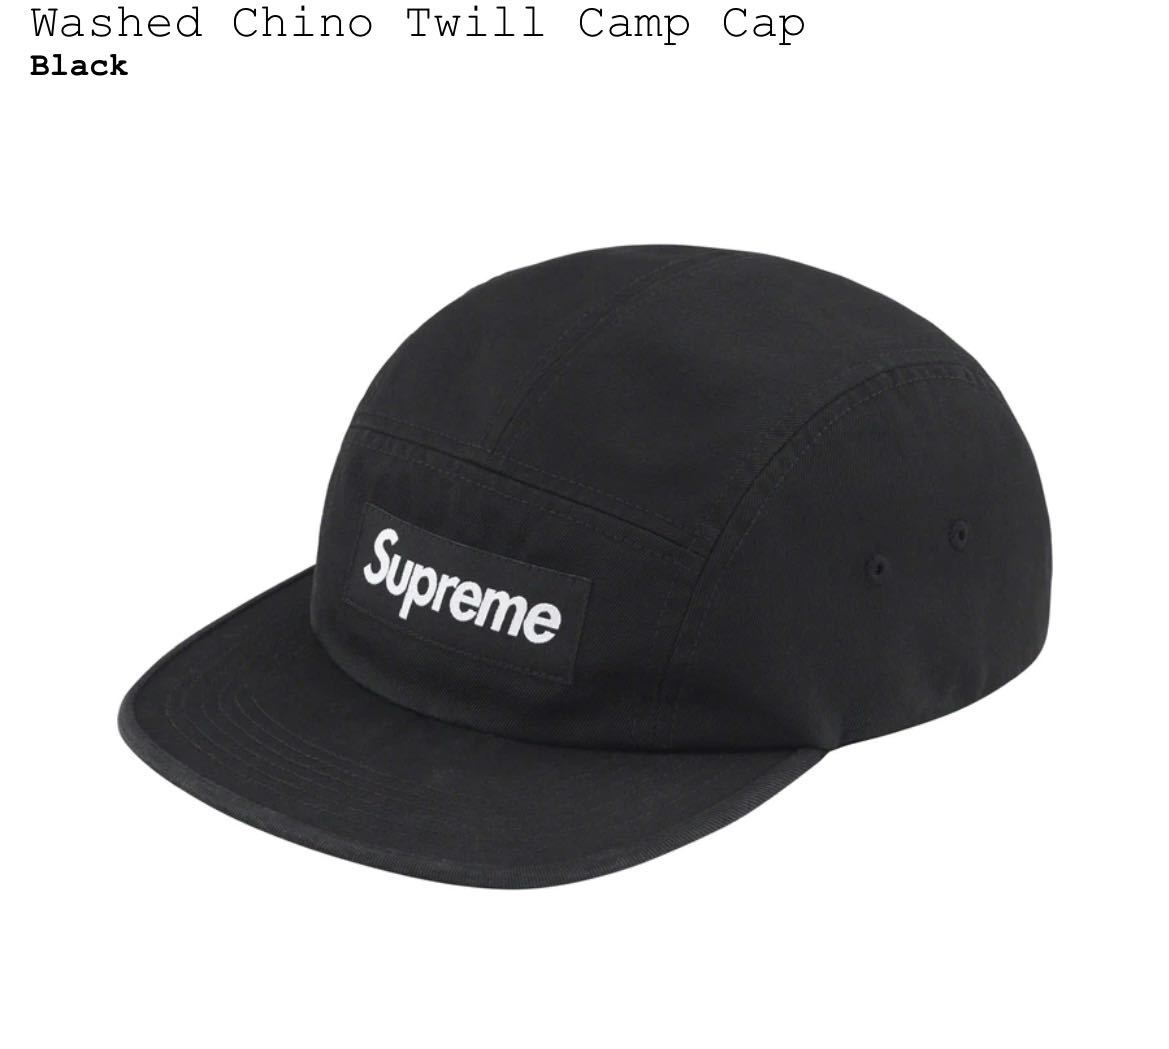 Supreme Washed Chino Twill Camp Cap シュプリーム ウォッシュド チノ ツイル キャンプ BLACK 新品未使用